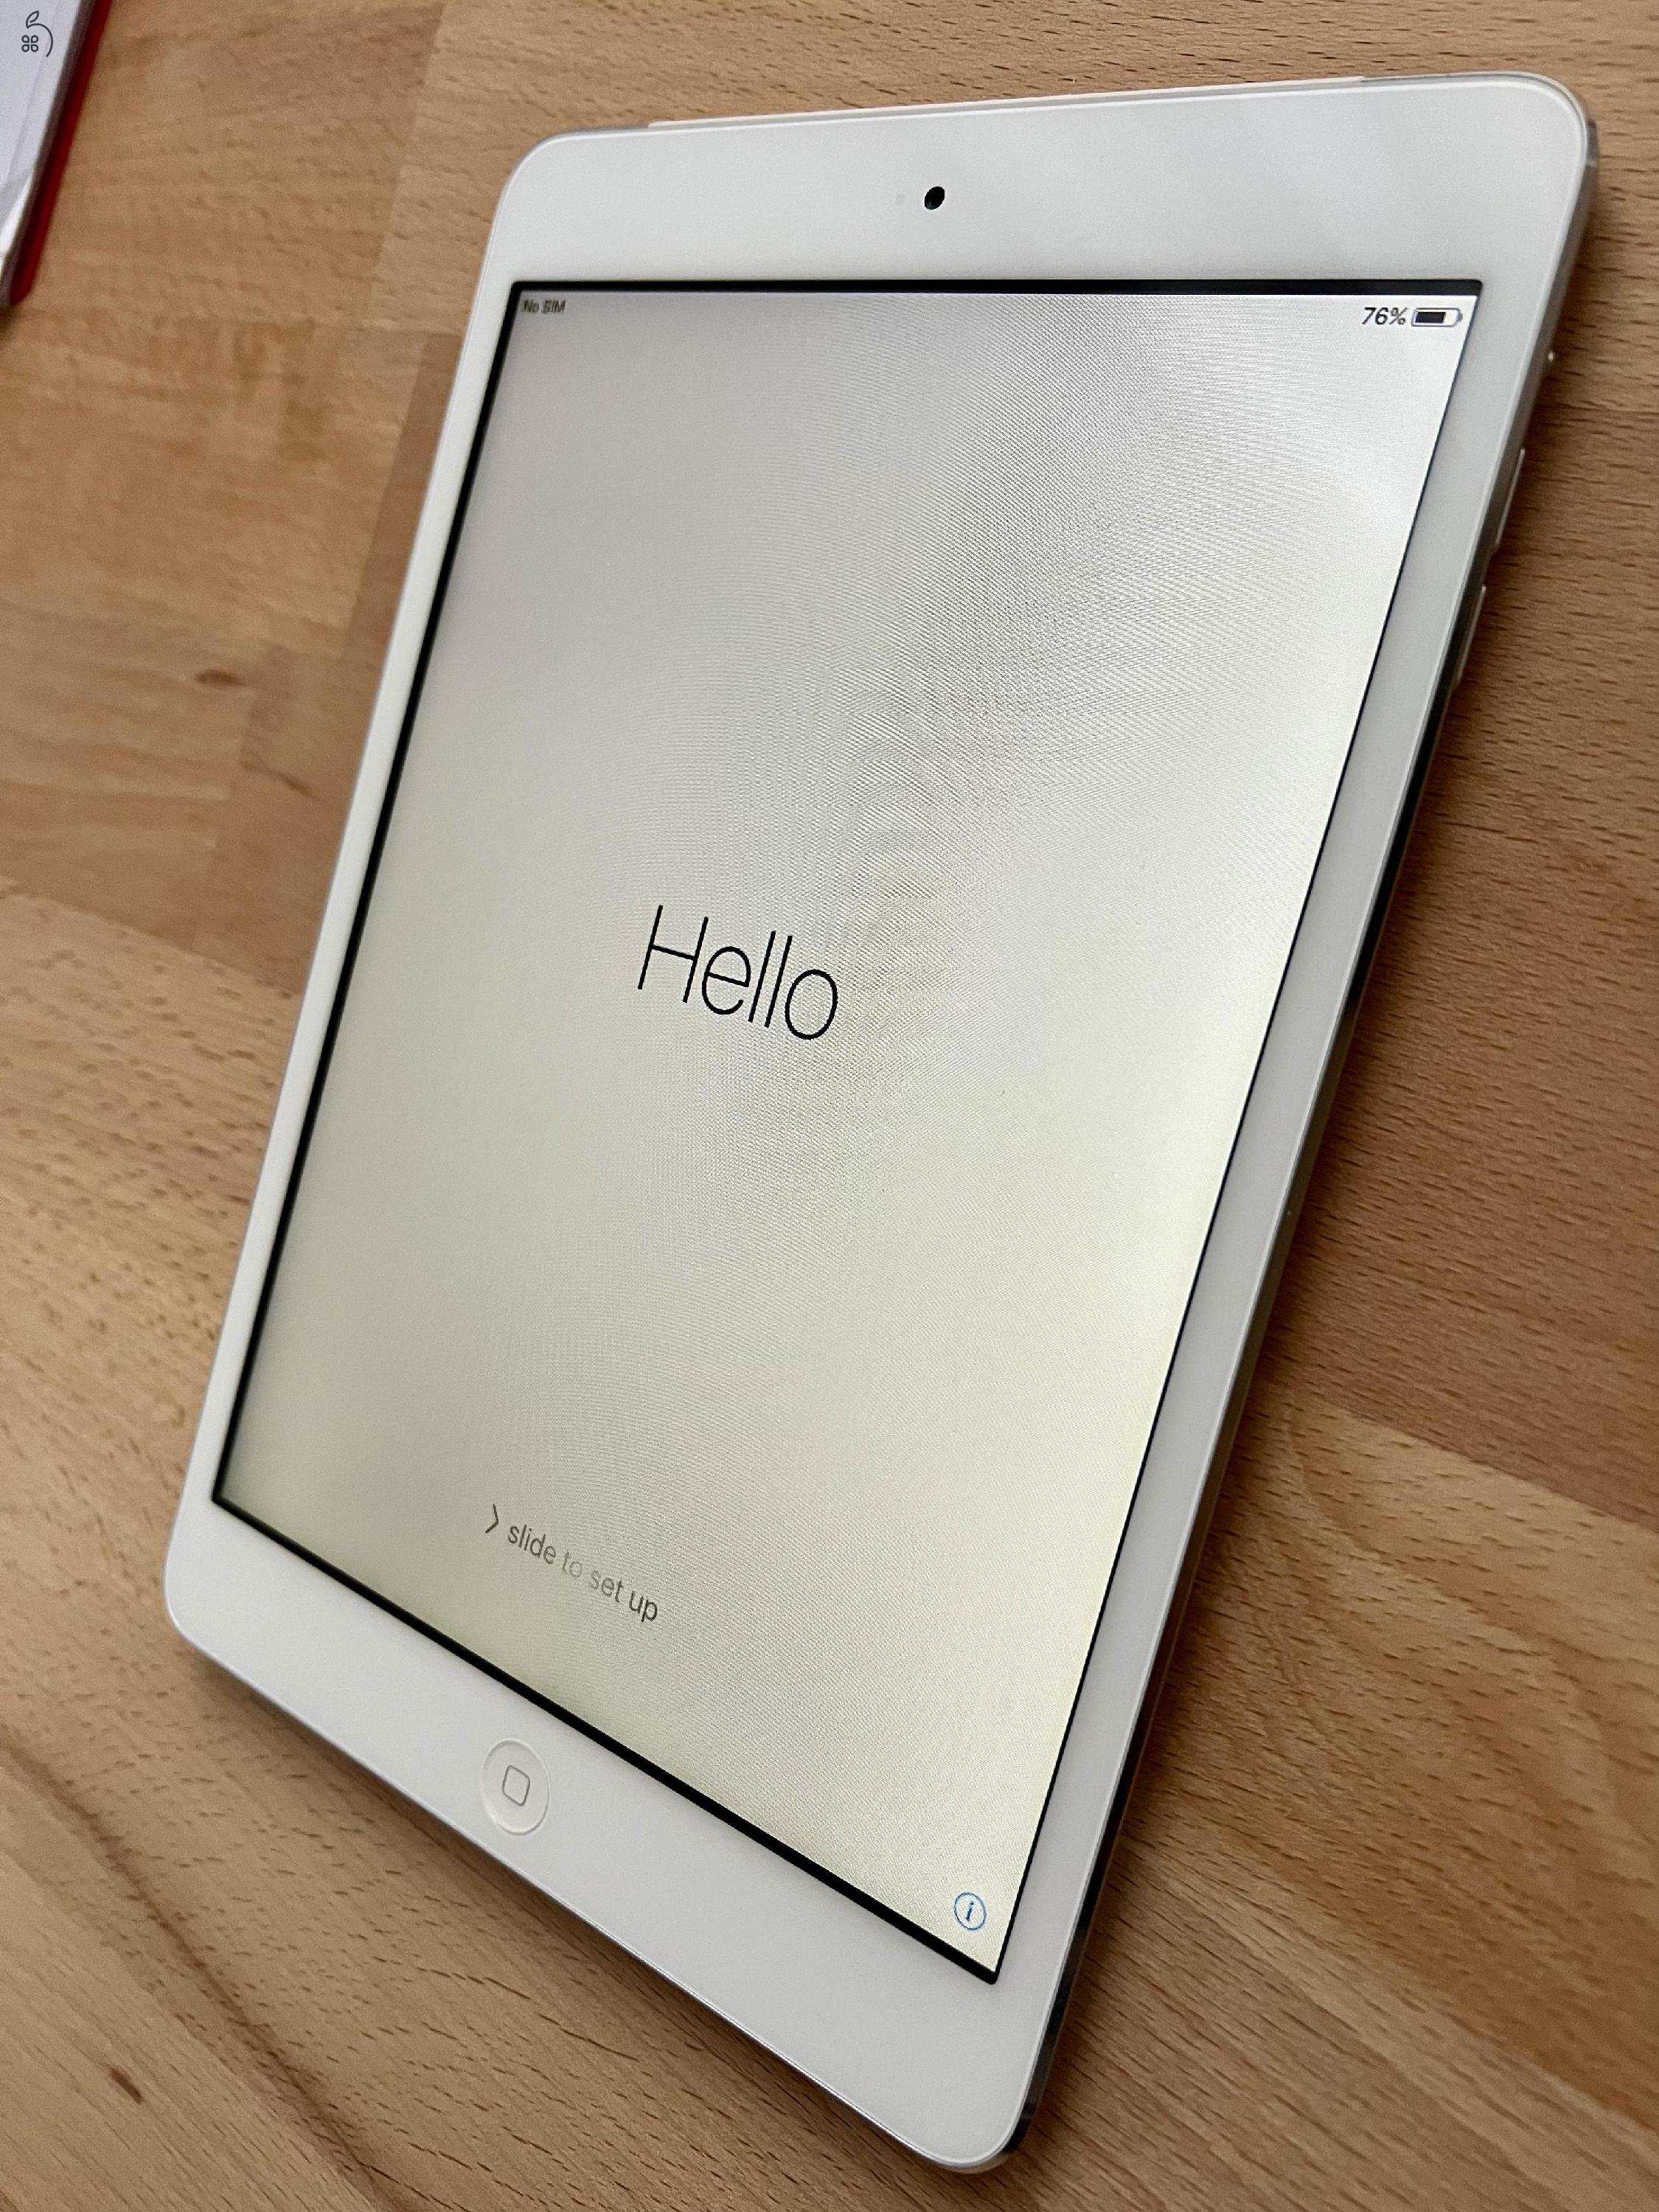 iPad mini Wifi + Cellular 16 GB Silver (A1455)